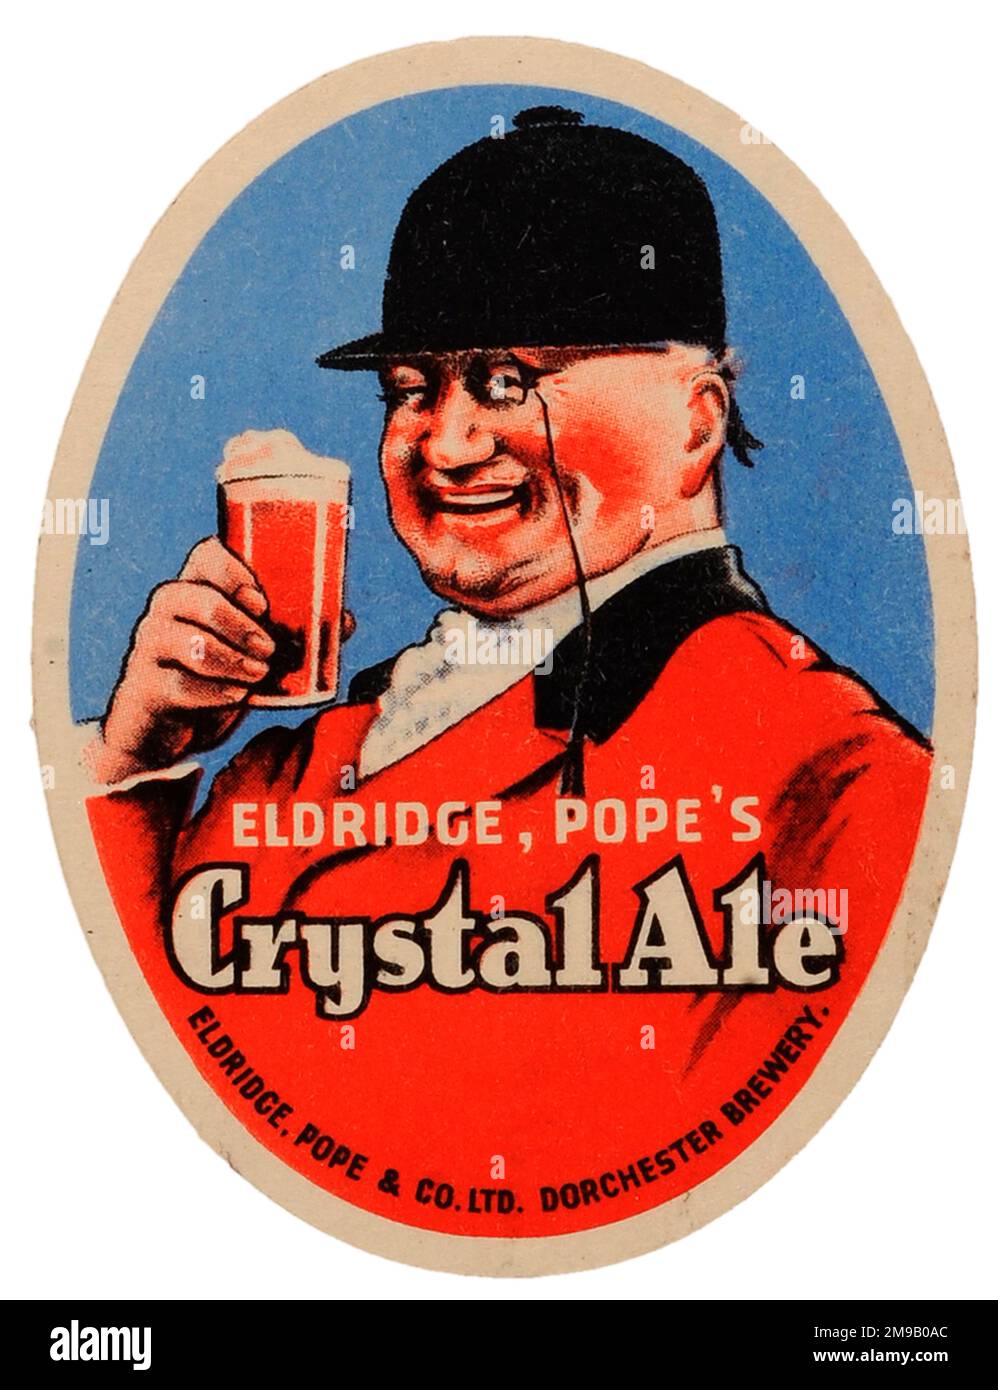 Eldridge, Pope's Crystal Ale Stock Photo